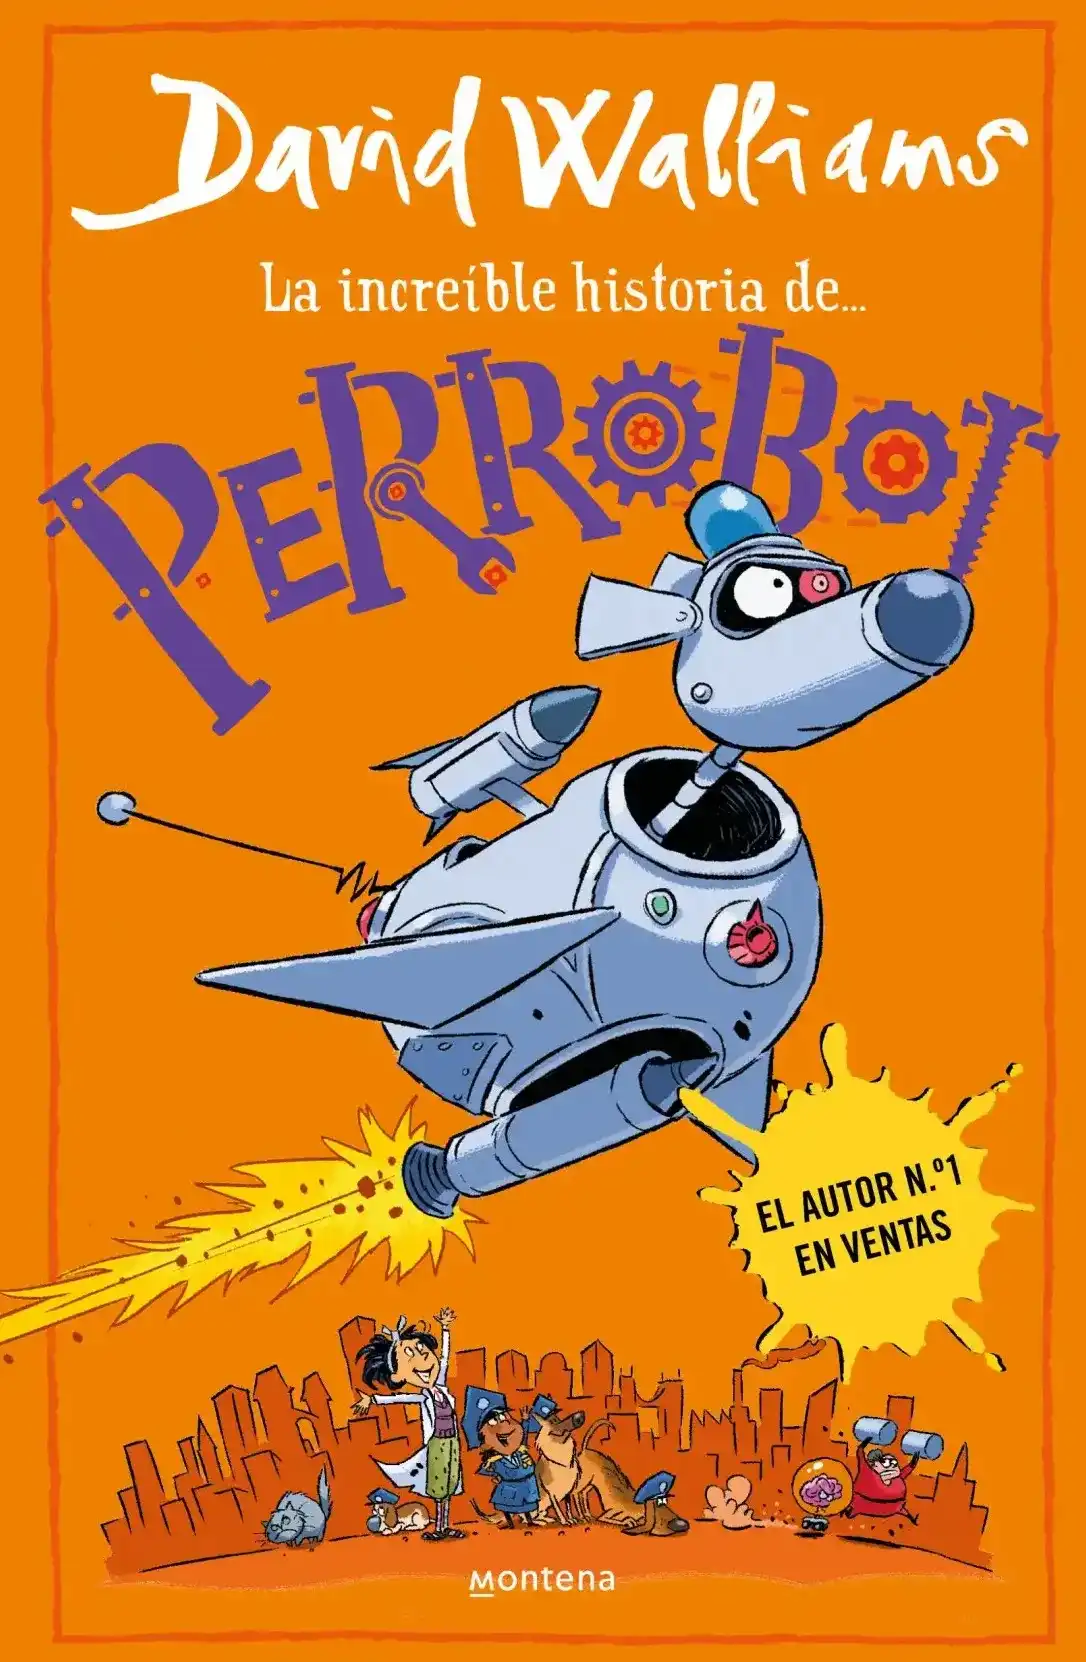 Perrobot